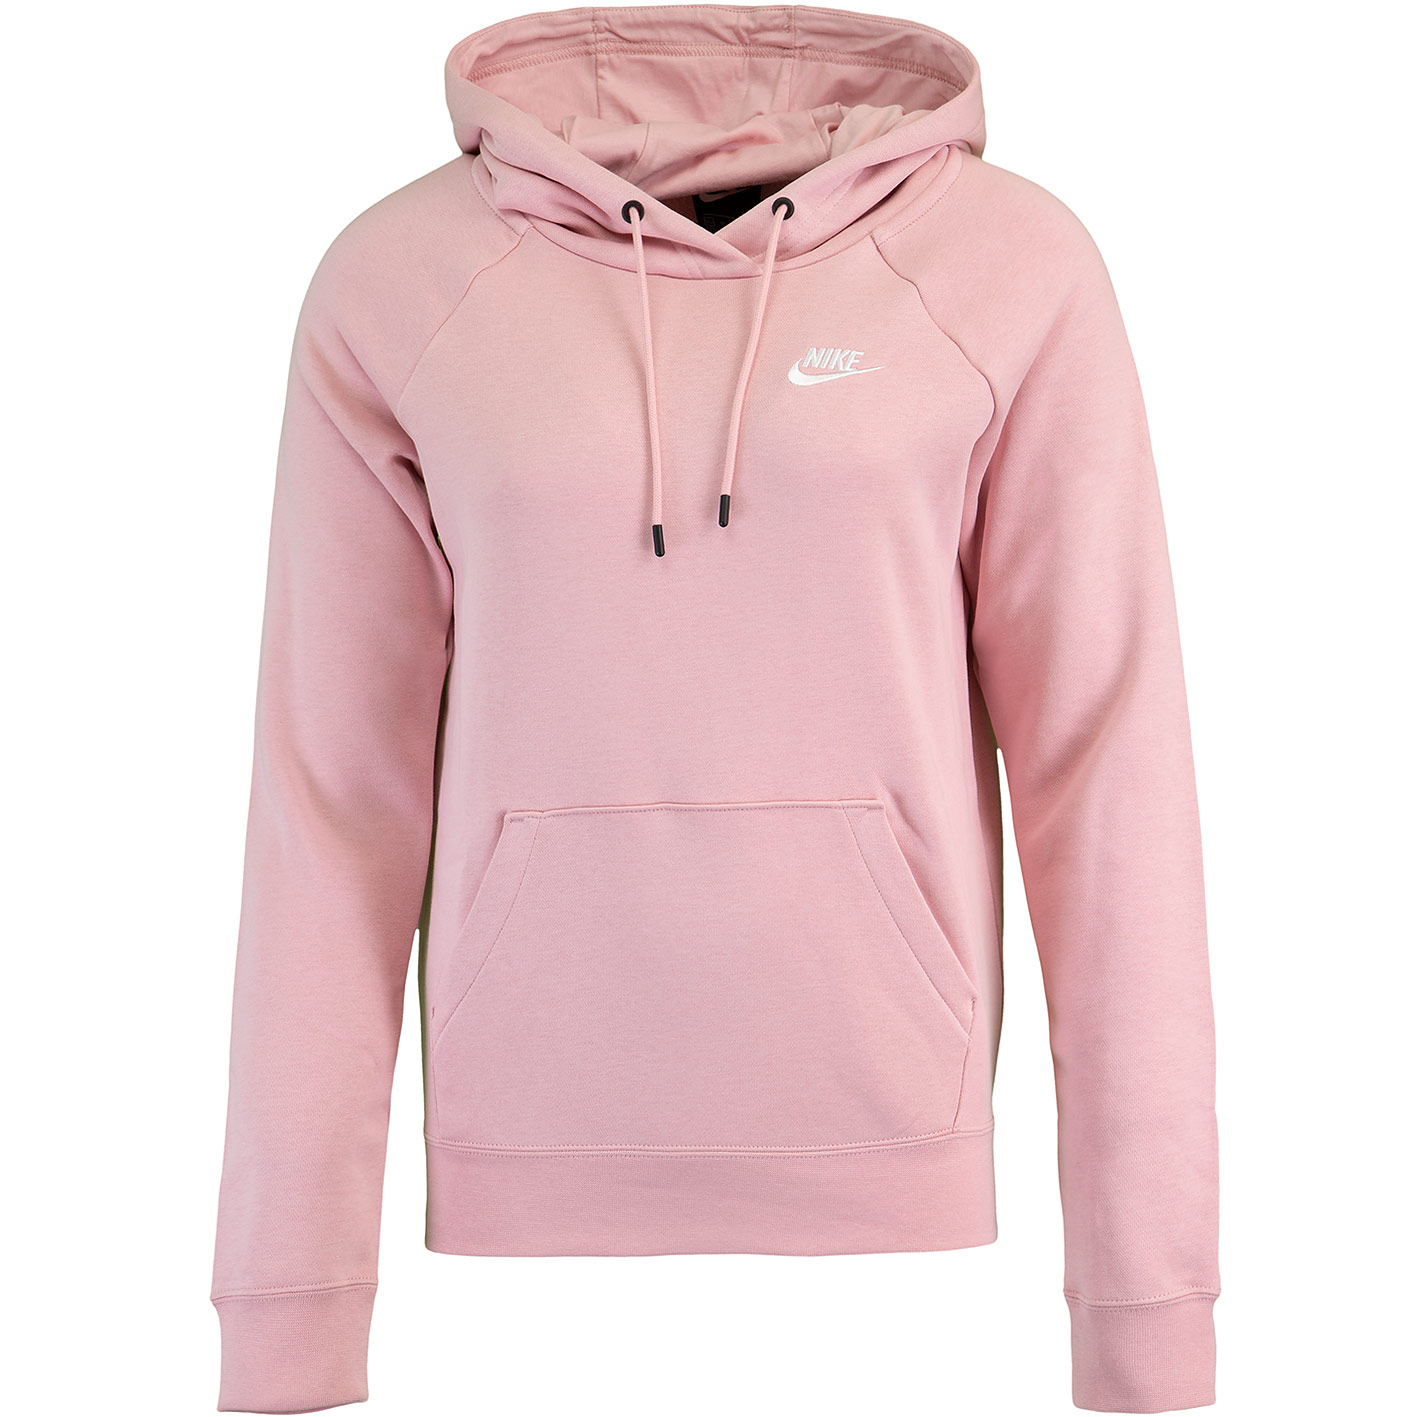 ☆ Nike Essential Damen Hoody pink - hier bestellen!